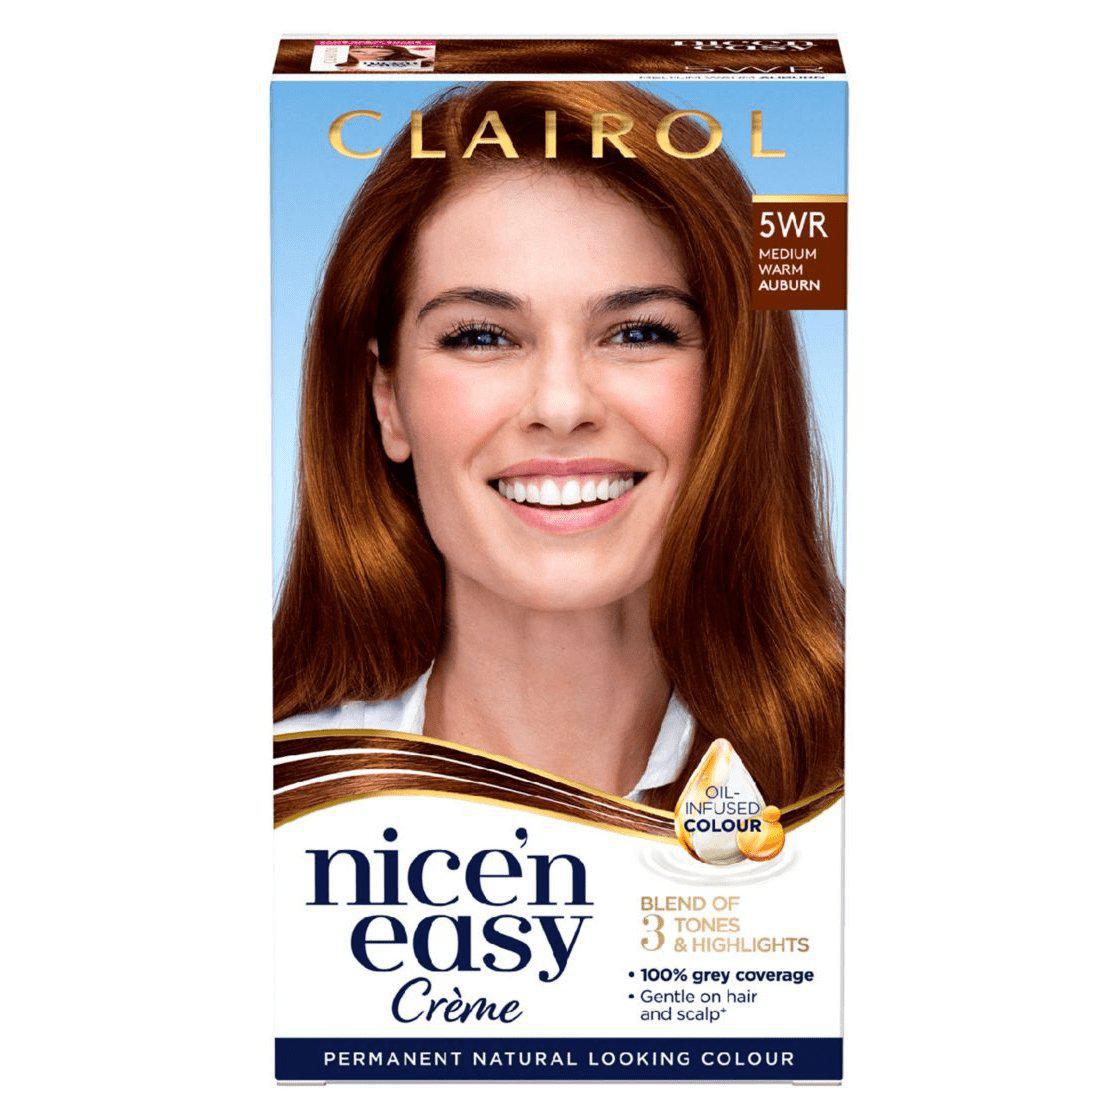 Clairol Nice N Easy Crème Natural Permanent Hair Dye - 5WR Medium Warm Auburn - Healthxpress.ie